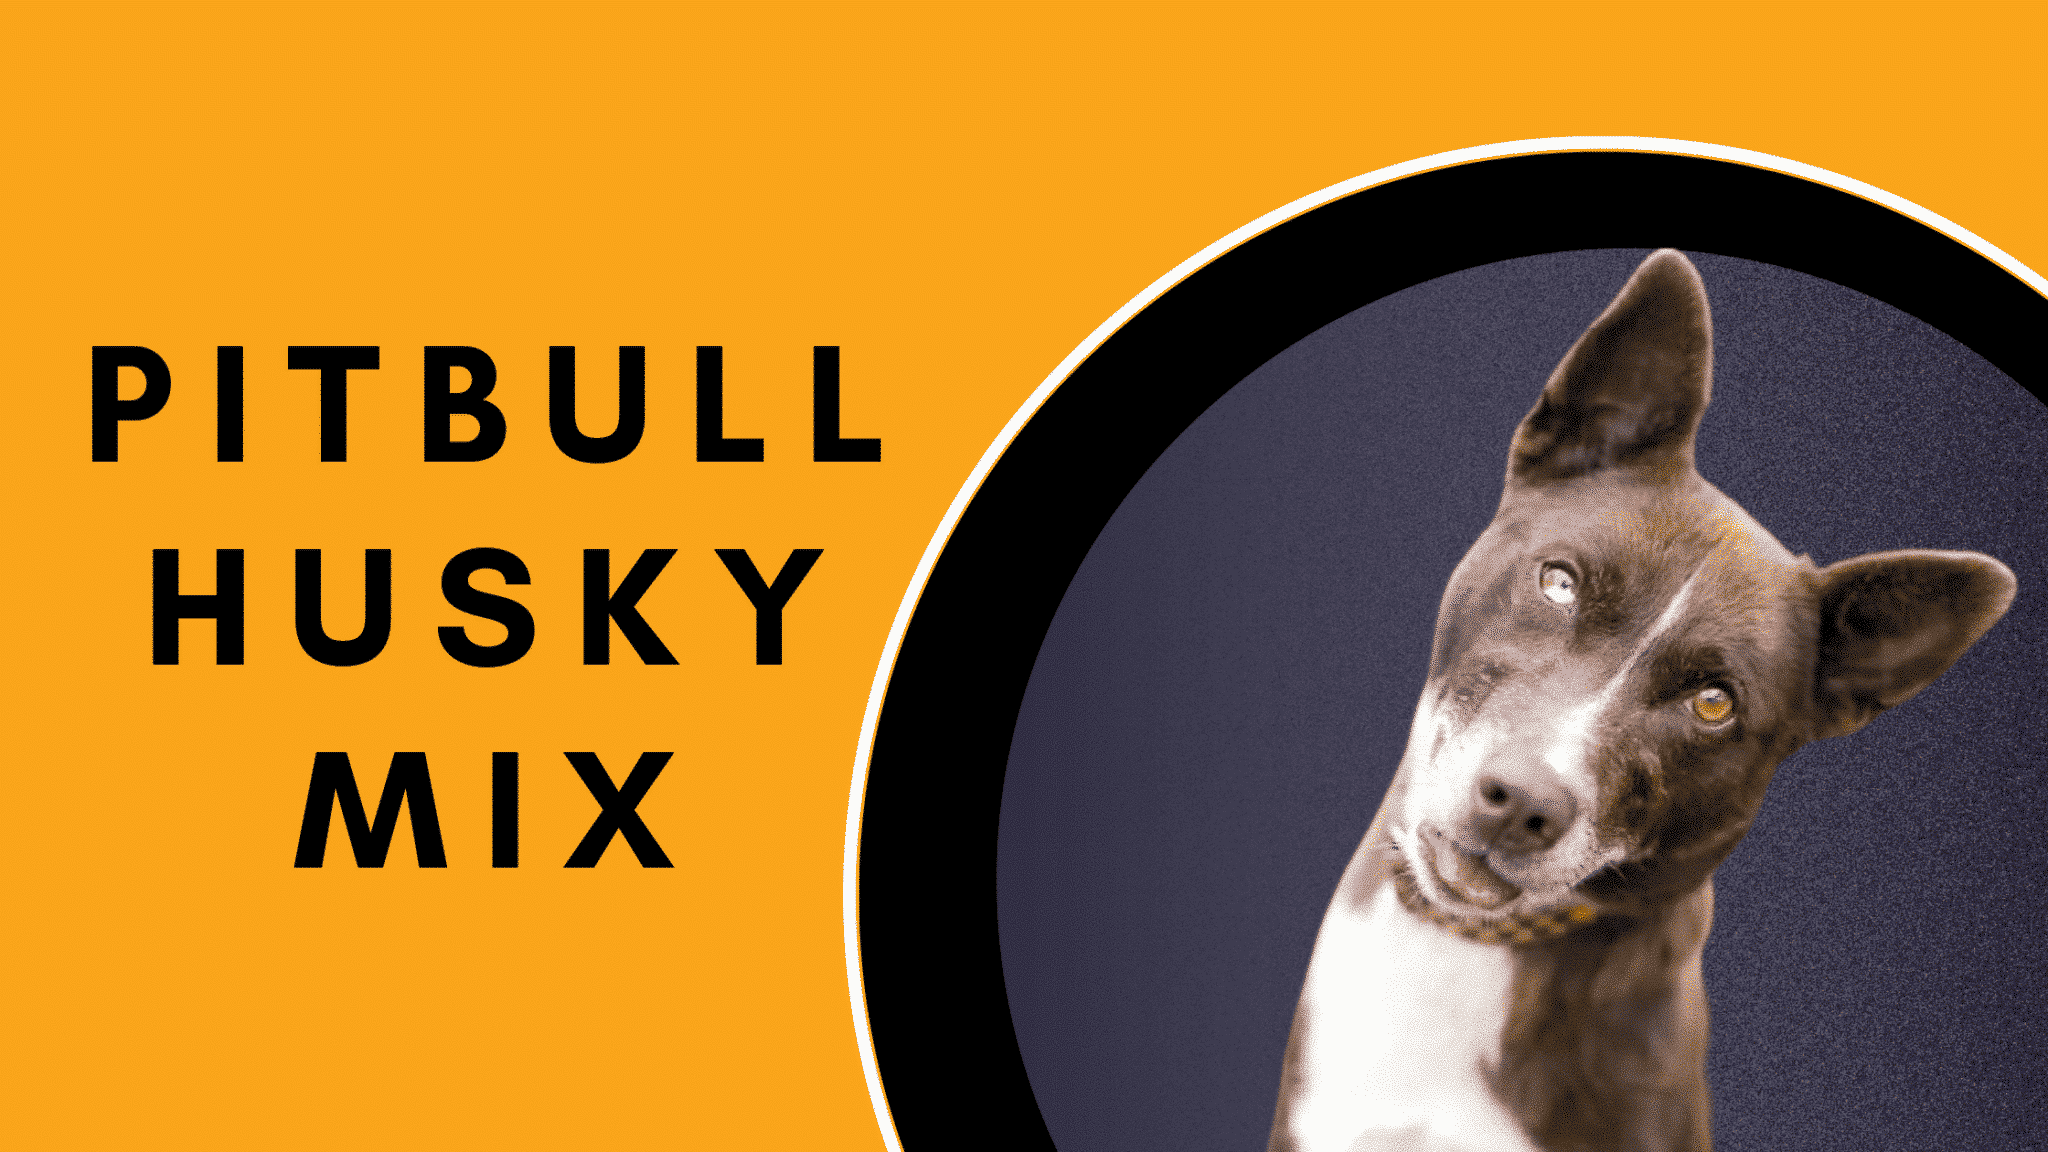 Pitbull husky mix